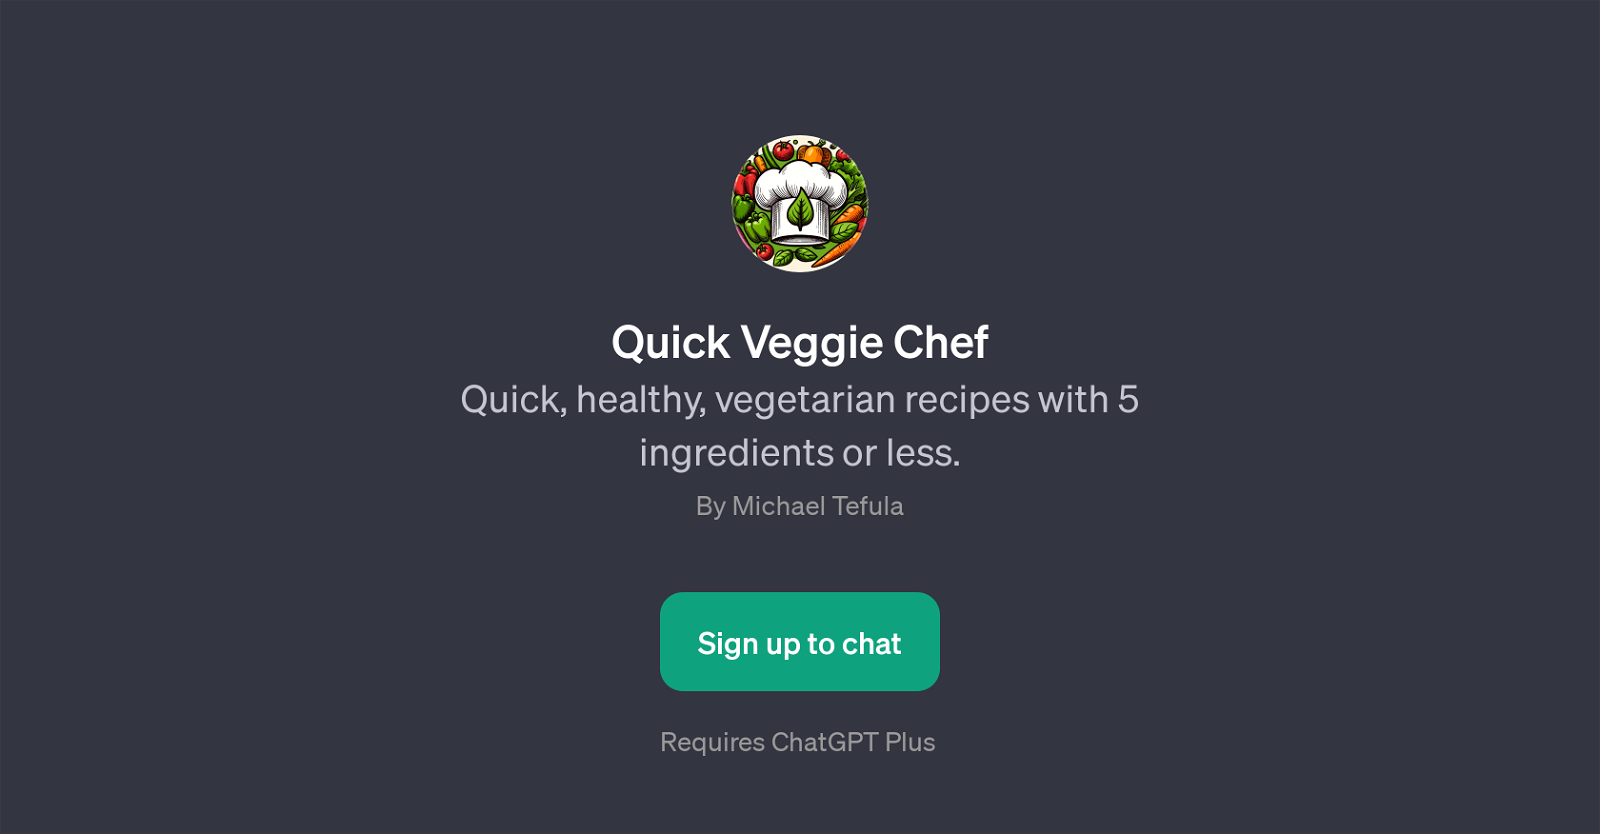 Quick Veggie Chef website